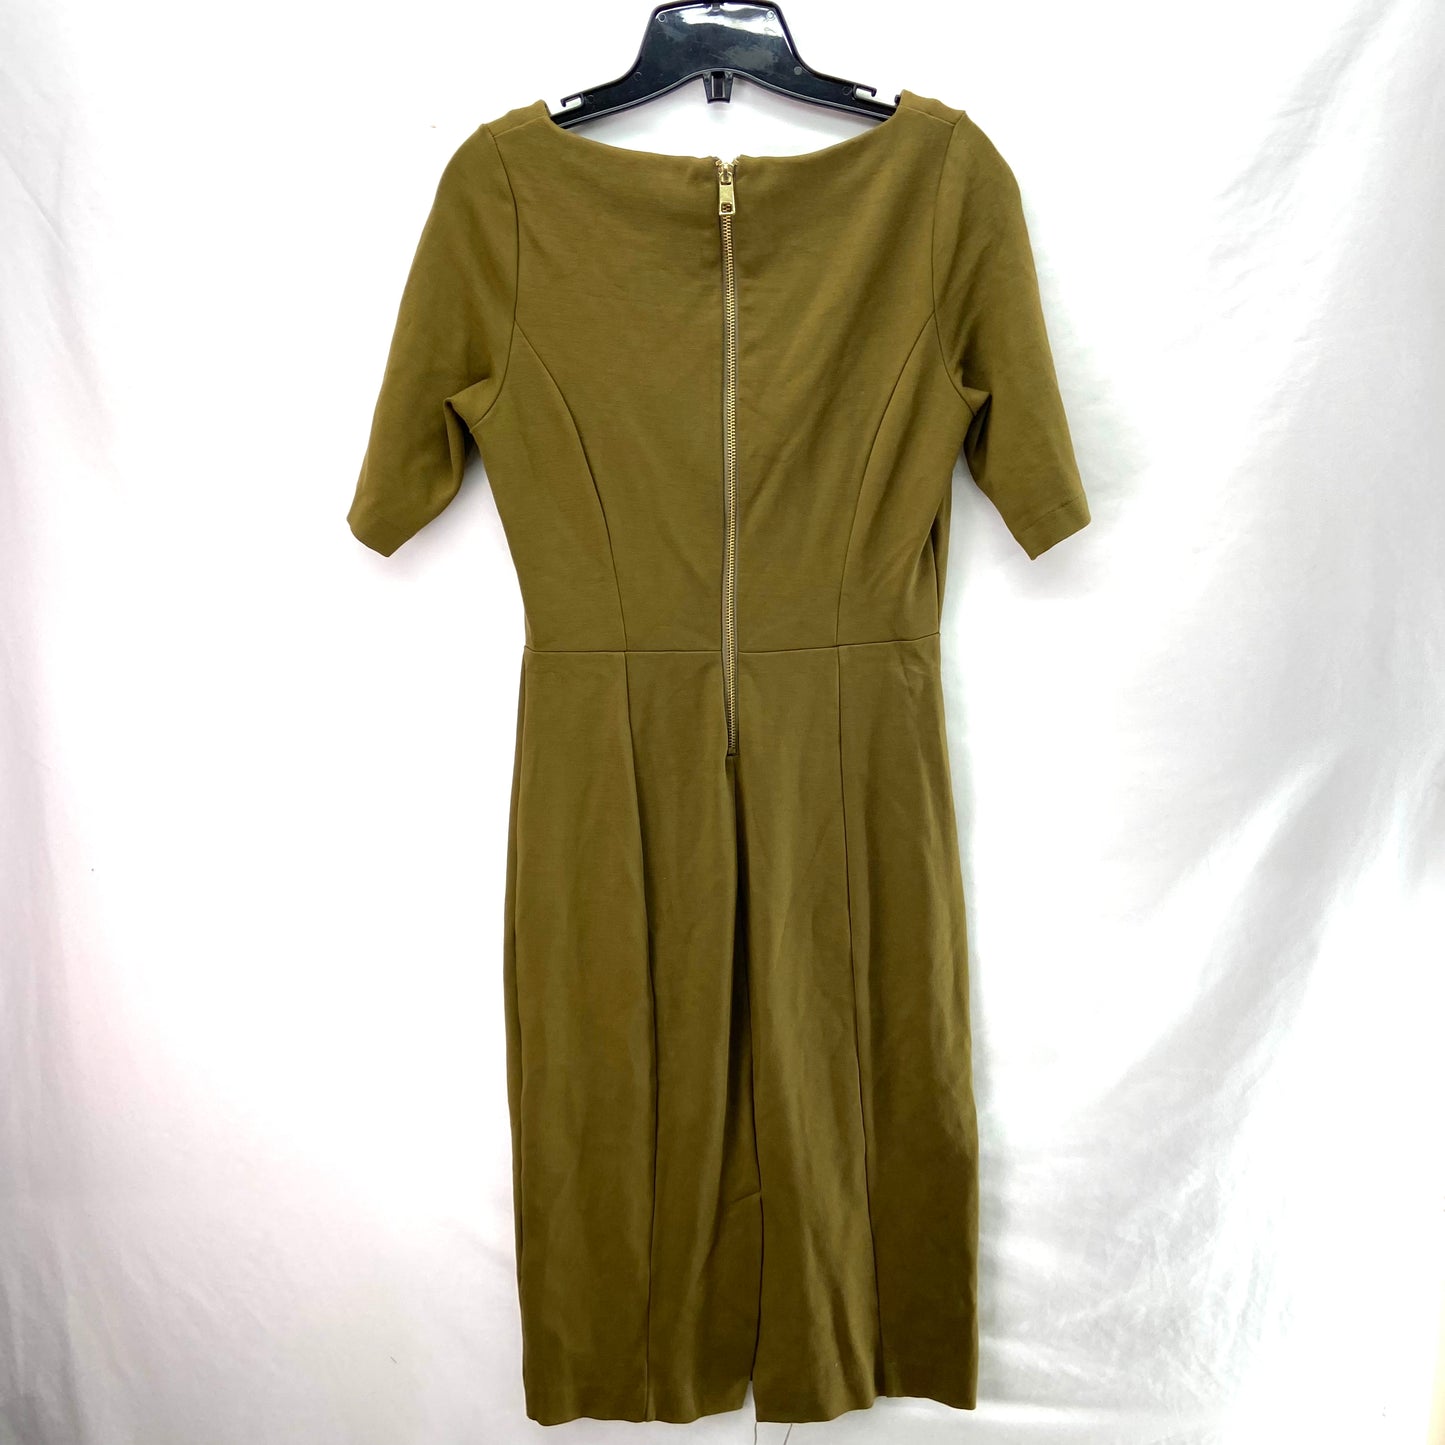 Banana Republic Women's Zip Up Dress Khaki Green - Size 4